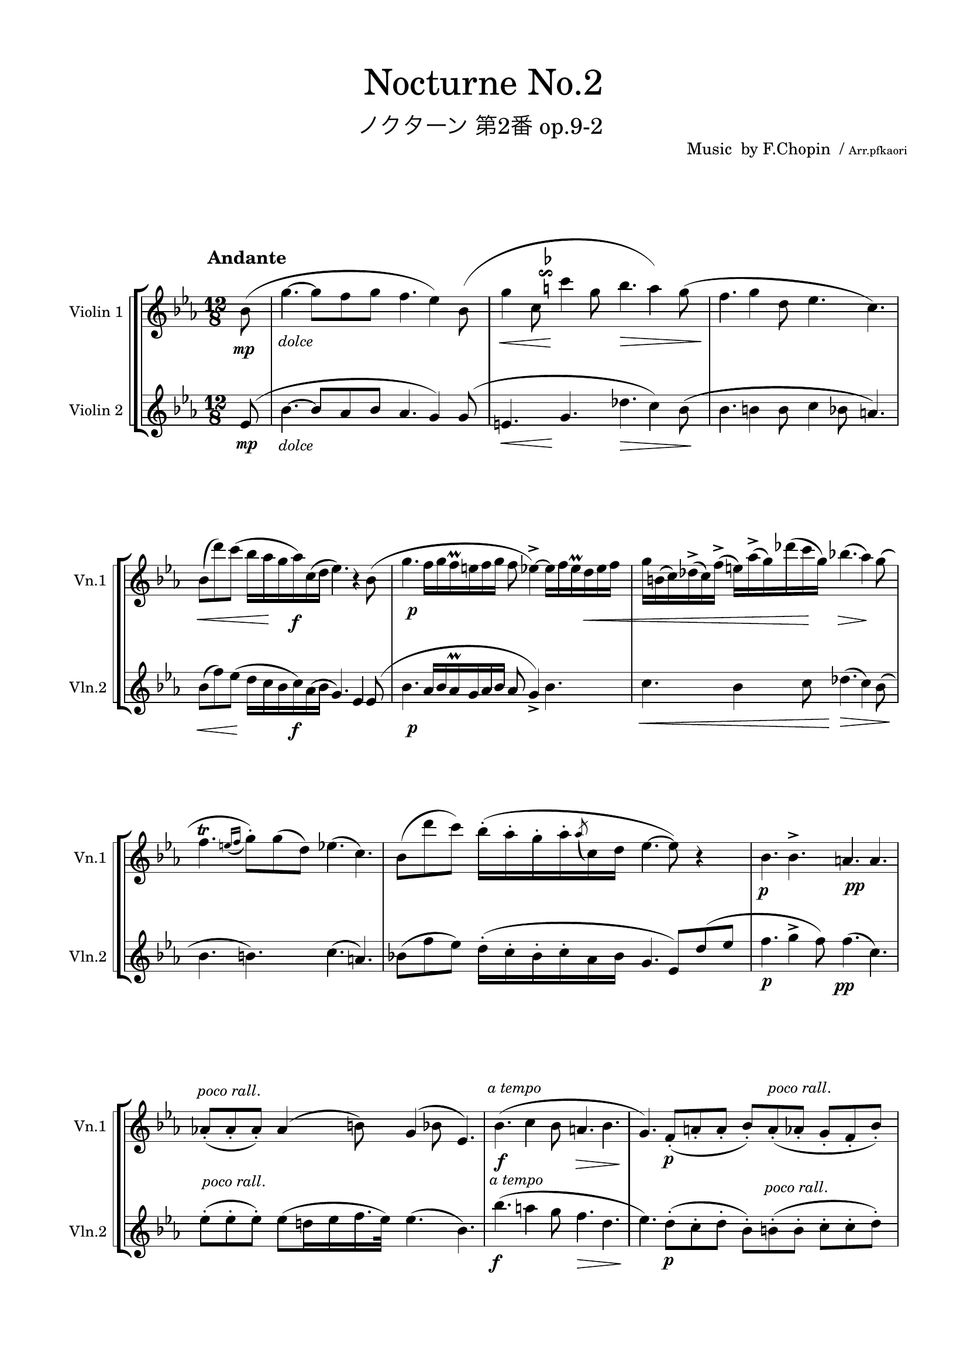 shopin - Nocturne No. 2 (1ver,Violin Duo/Unaccompanied) by pfkaori